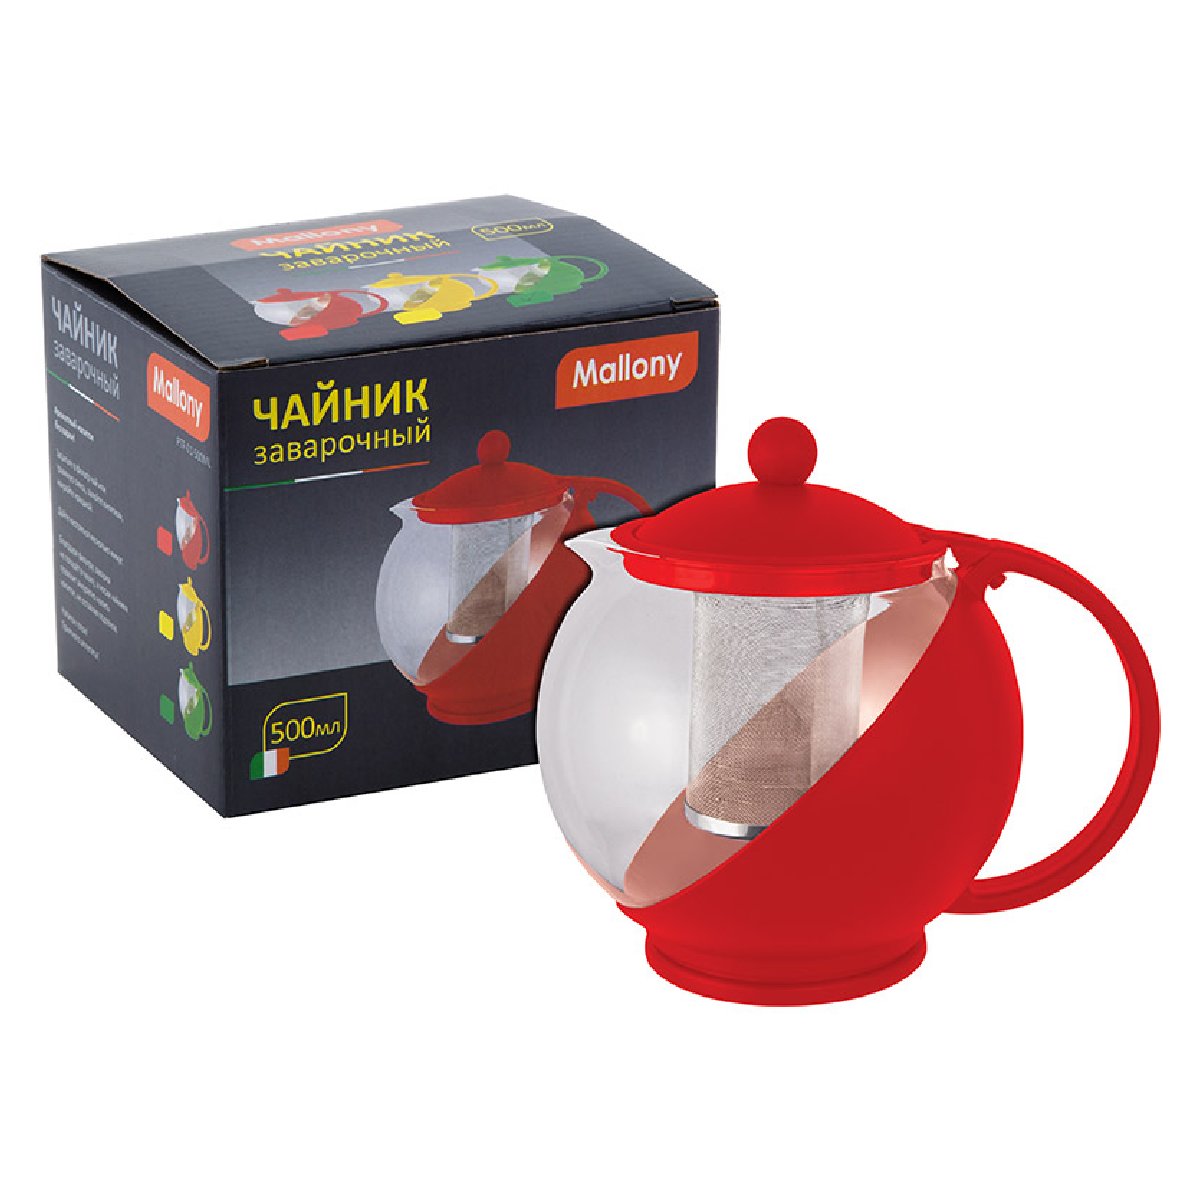 Чайник заварочный Mallony PTP-01-500ML 0.5л (910101)Купить